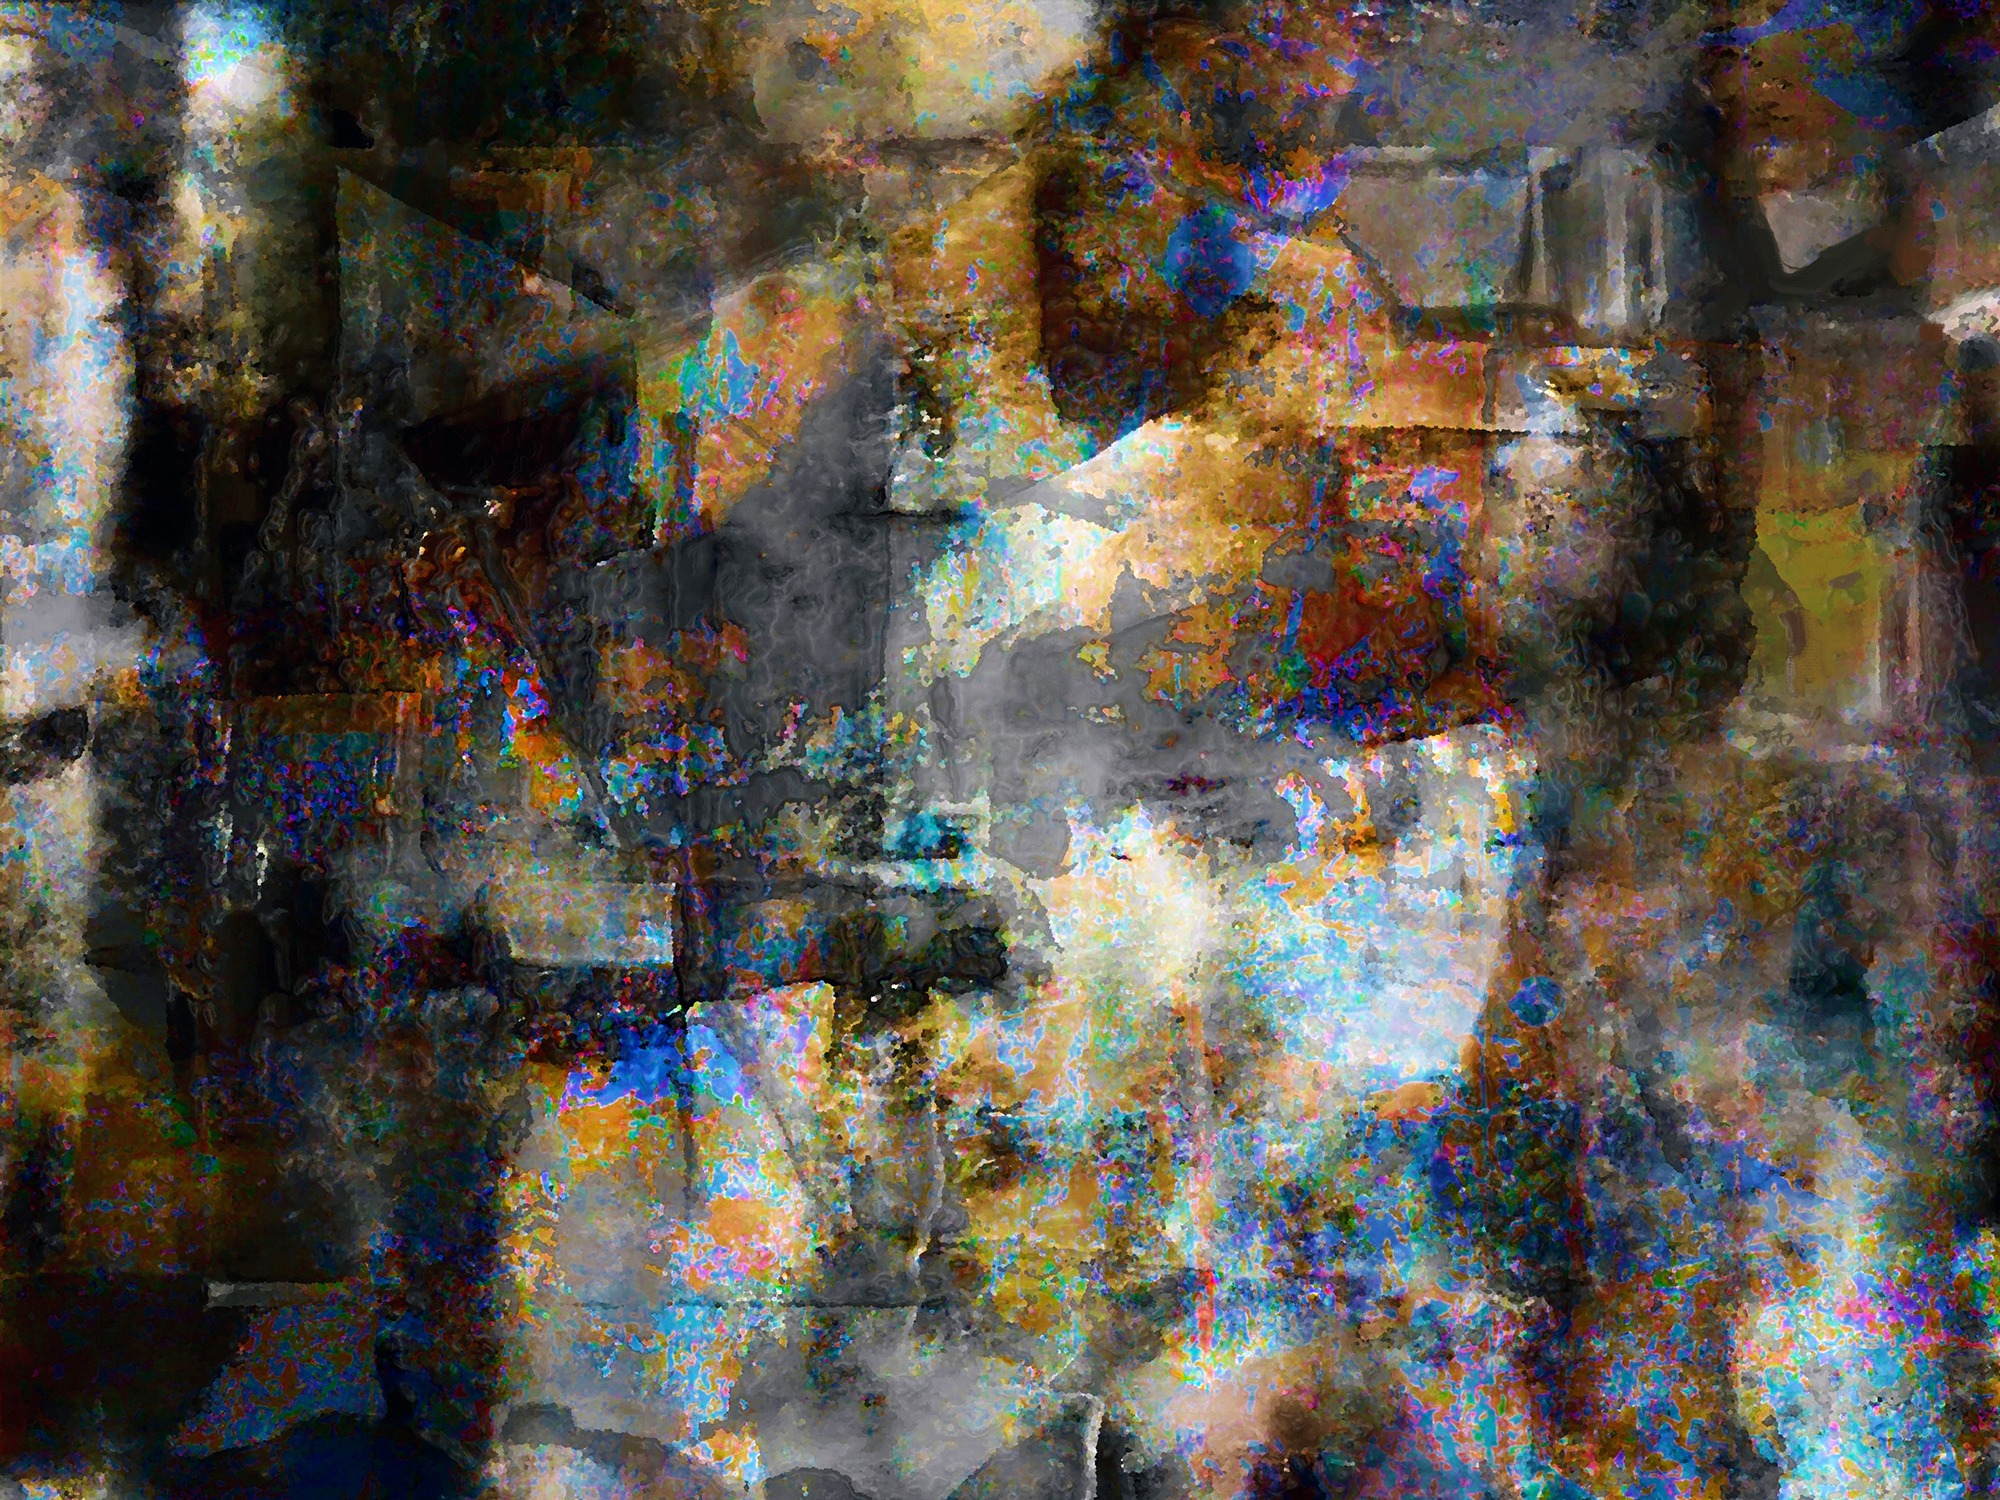 Pristowscheg. Digital Art. Abstract Art. NEFORMANLA3 100x135 cm | 40x53,35 in